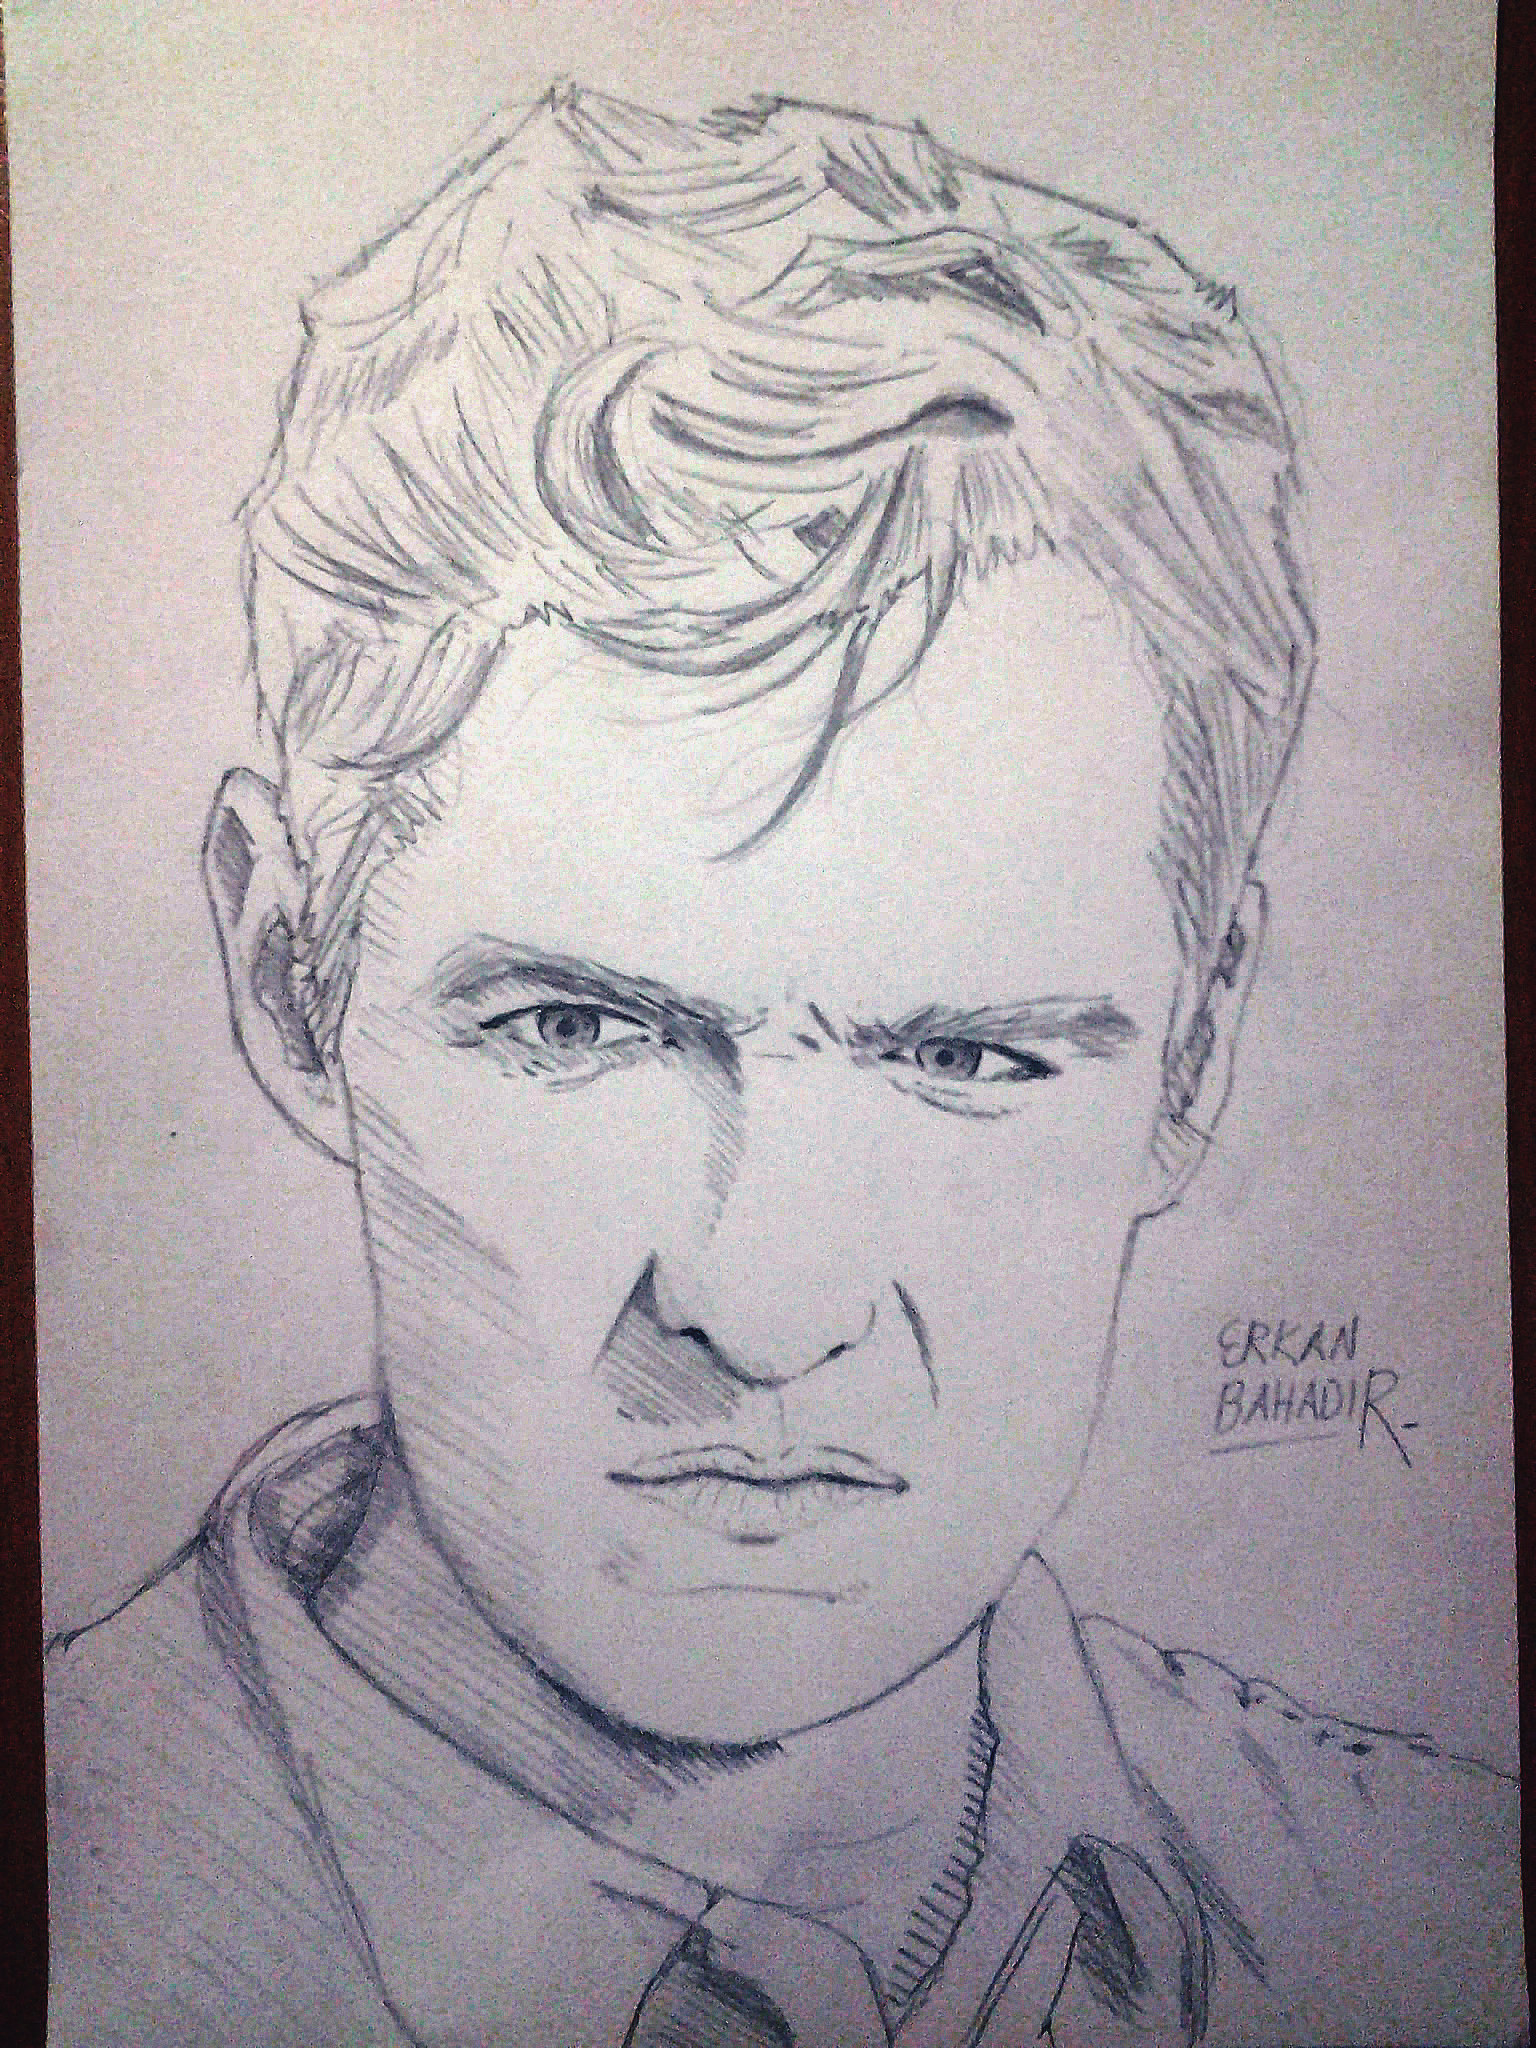 Detective Rust Cohle Drawing - Matthew McConaughey by erkanbahadir23 on ...